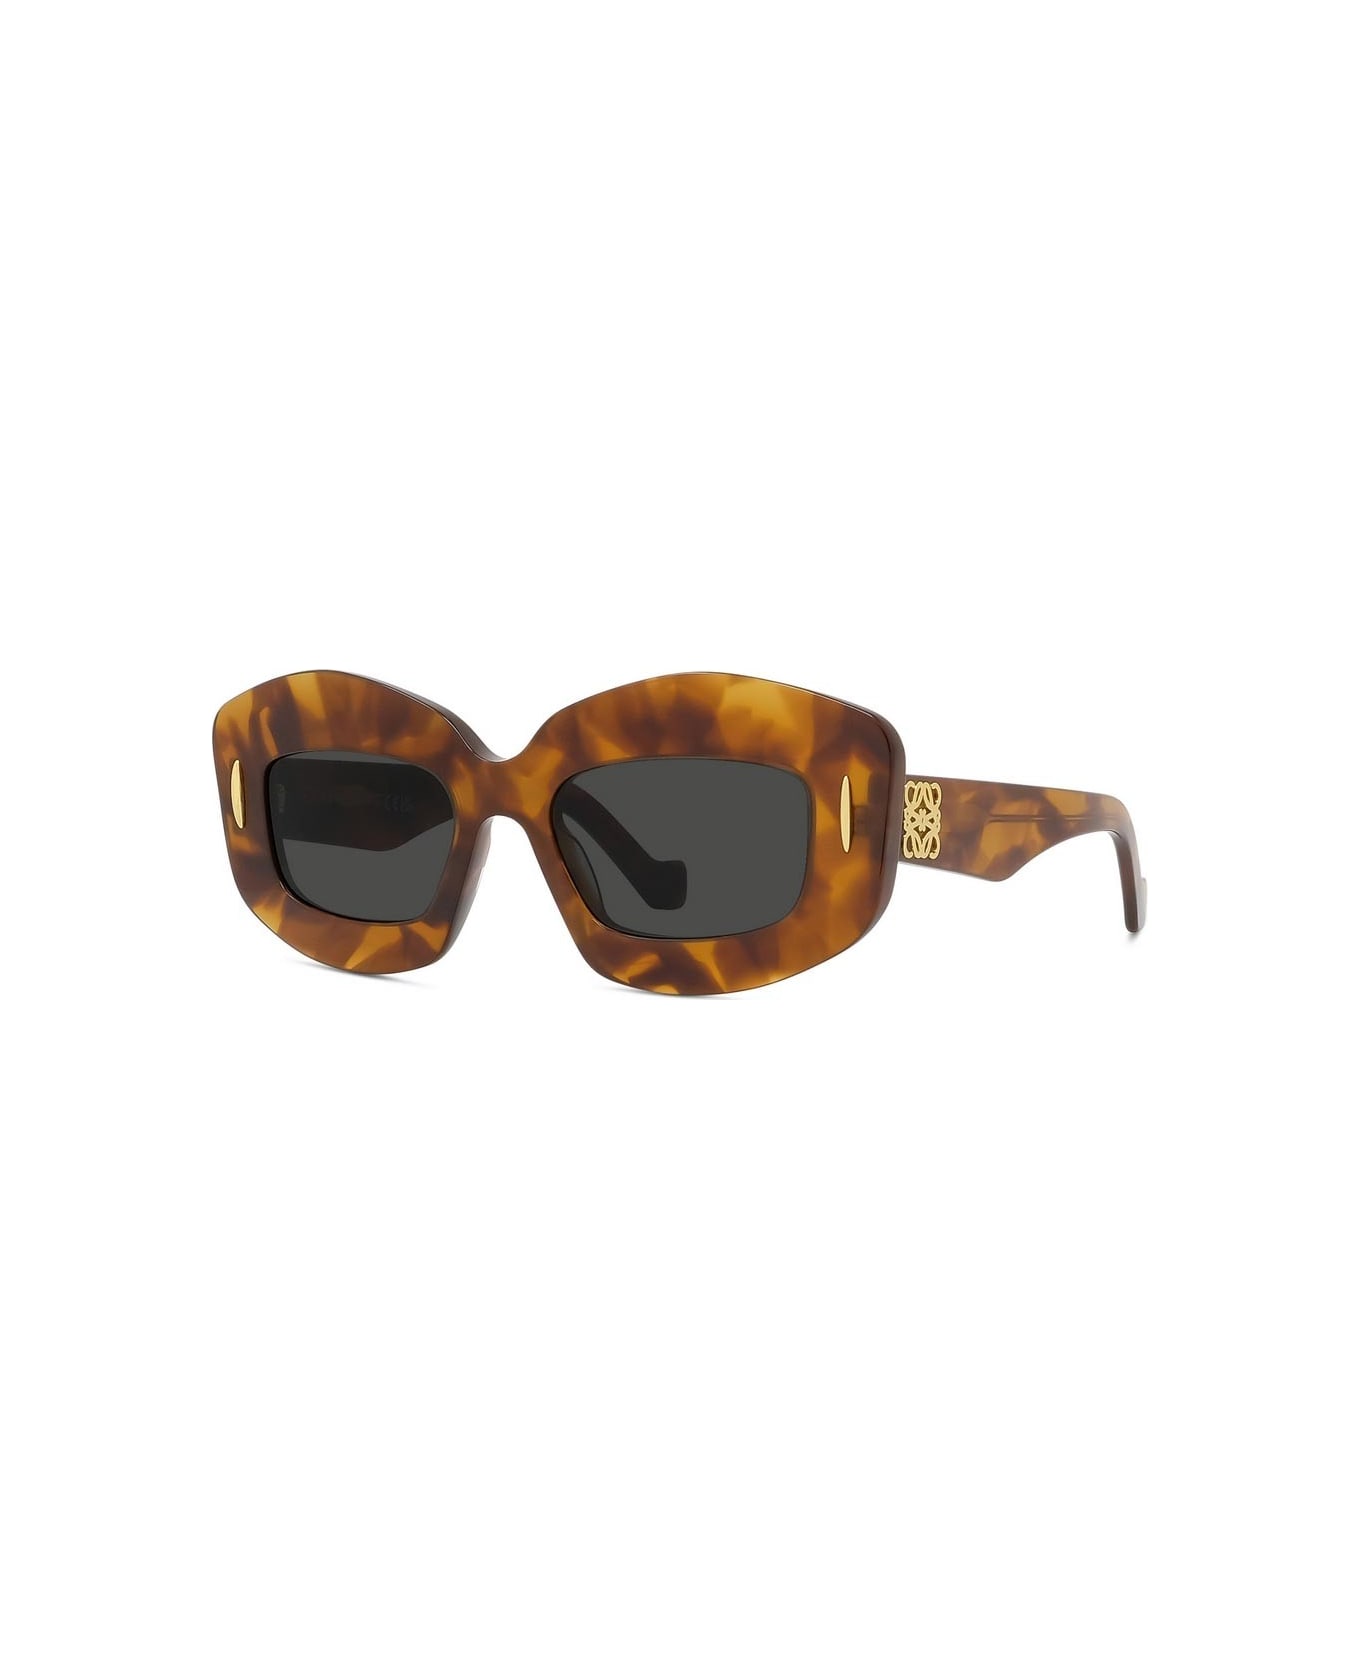 Loewe Sunglasses - Marrone striato/Grigio